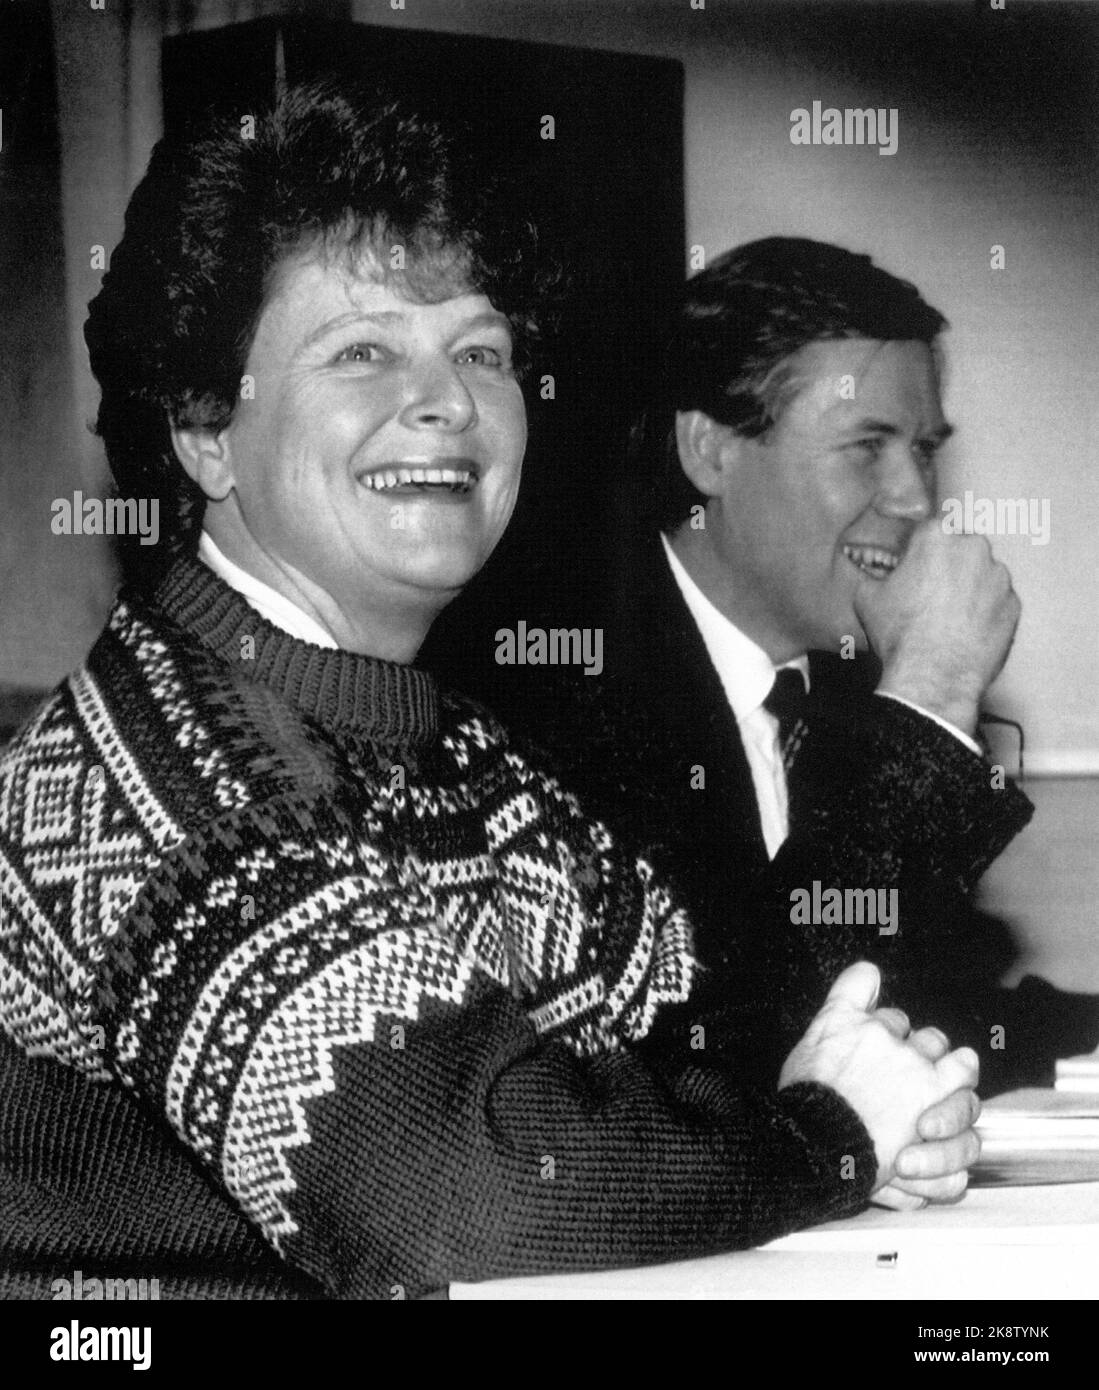 Jevnaker 19880131 Premierminister Gro Harlem Brundtland bei der Haushaltskonferenz der Regierung in Jevnaker. Brundtland trägt Marius-Pullover. Foto: NTB Archive / Corr / NTB Stockfoto